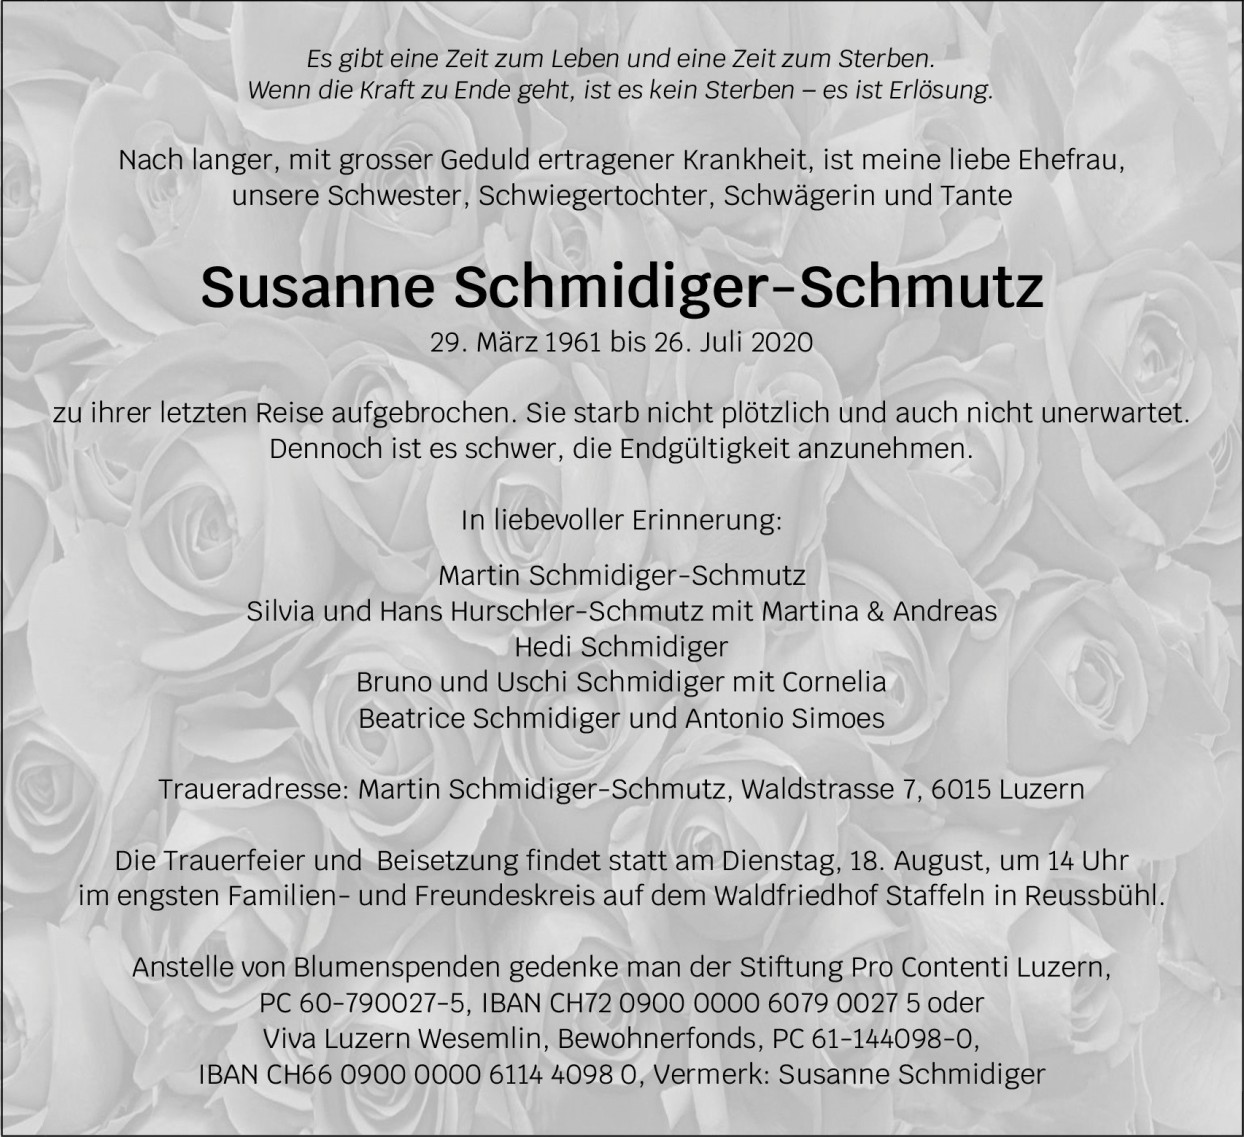 Susanne Schmidiger-Schmutz